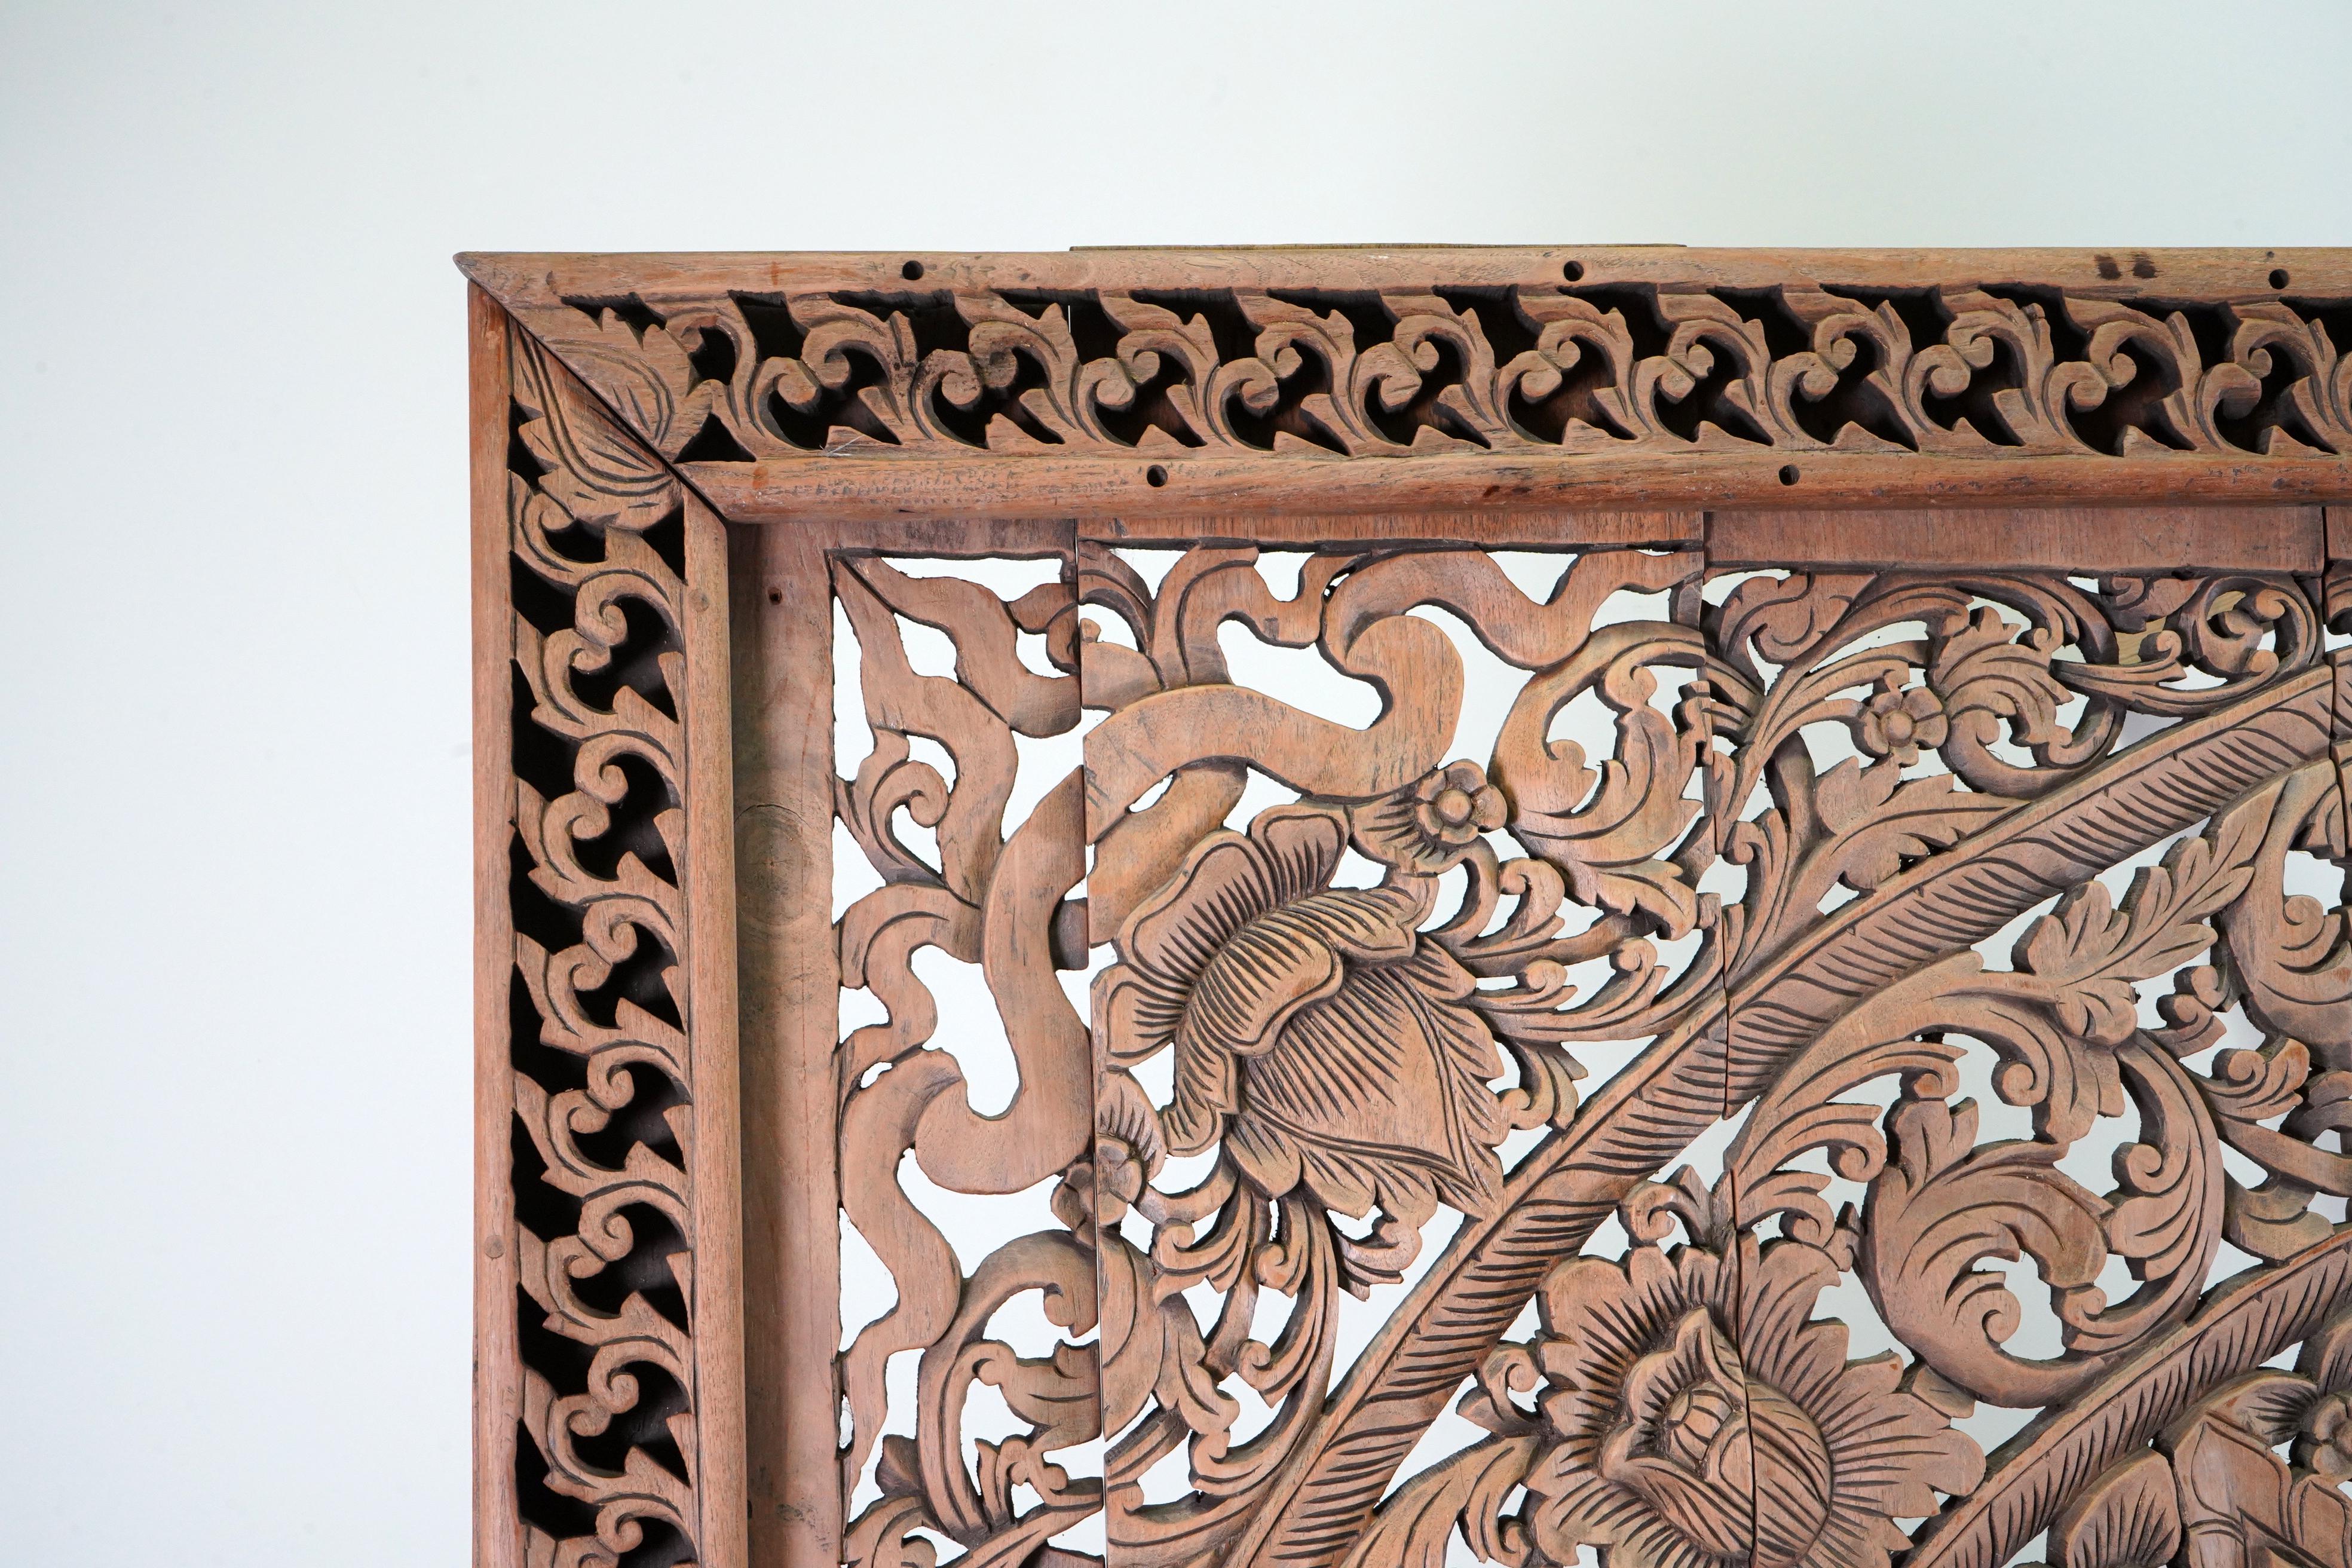 A Carved Teak Wood Lotus Flower Panel 8' x 8' 4